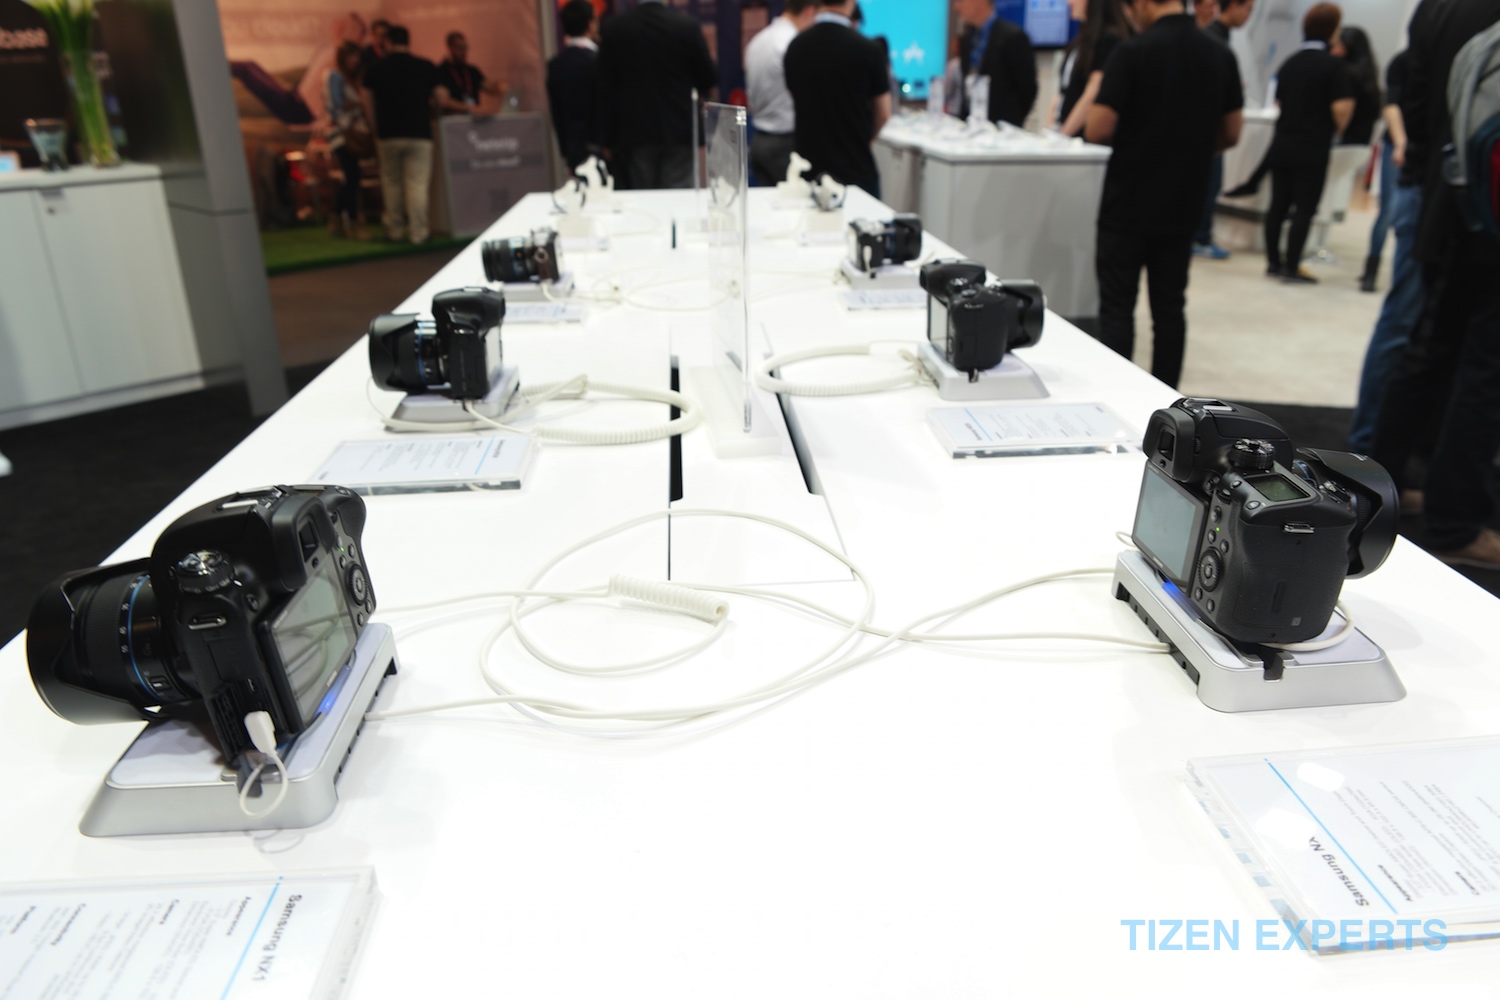 Samsung NX1 at mobile world congress 2015